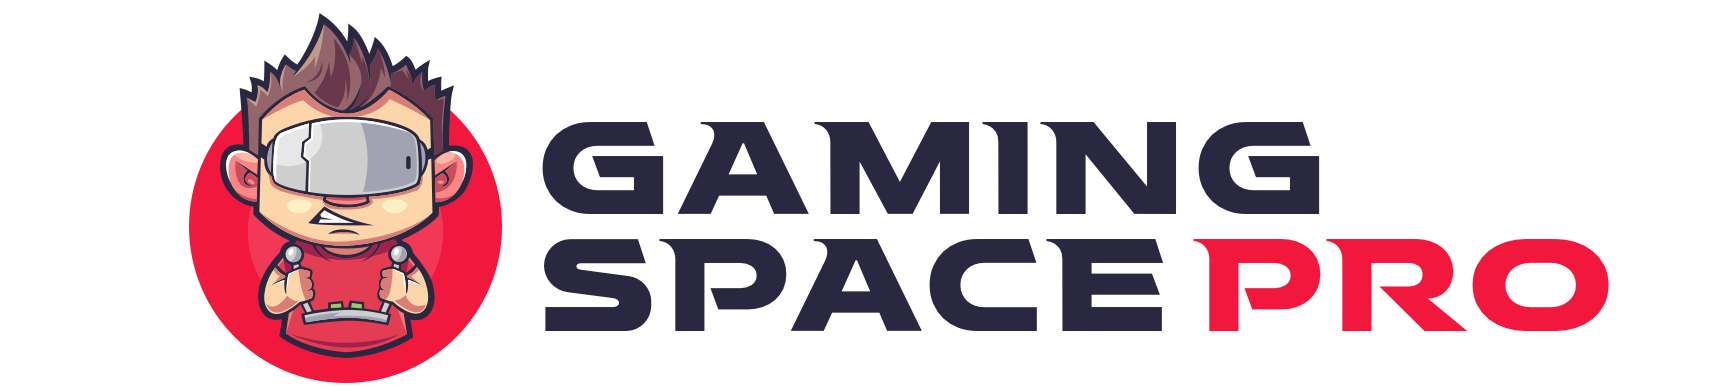 gamingspacepro